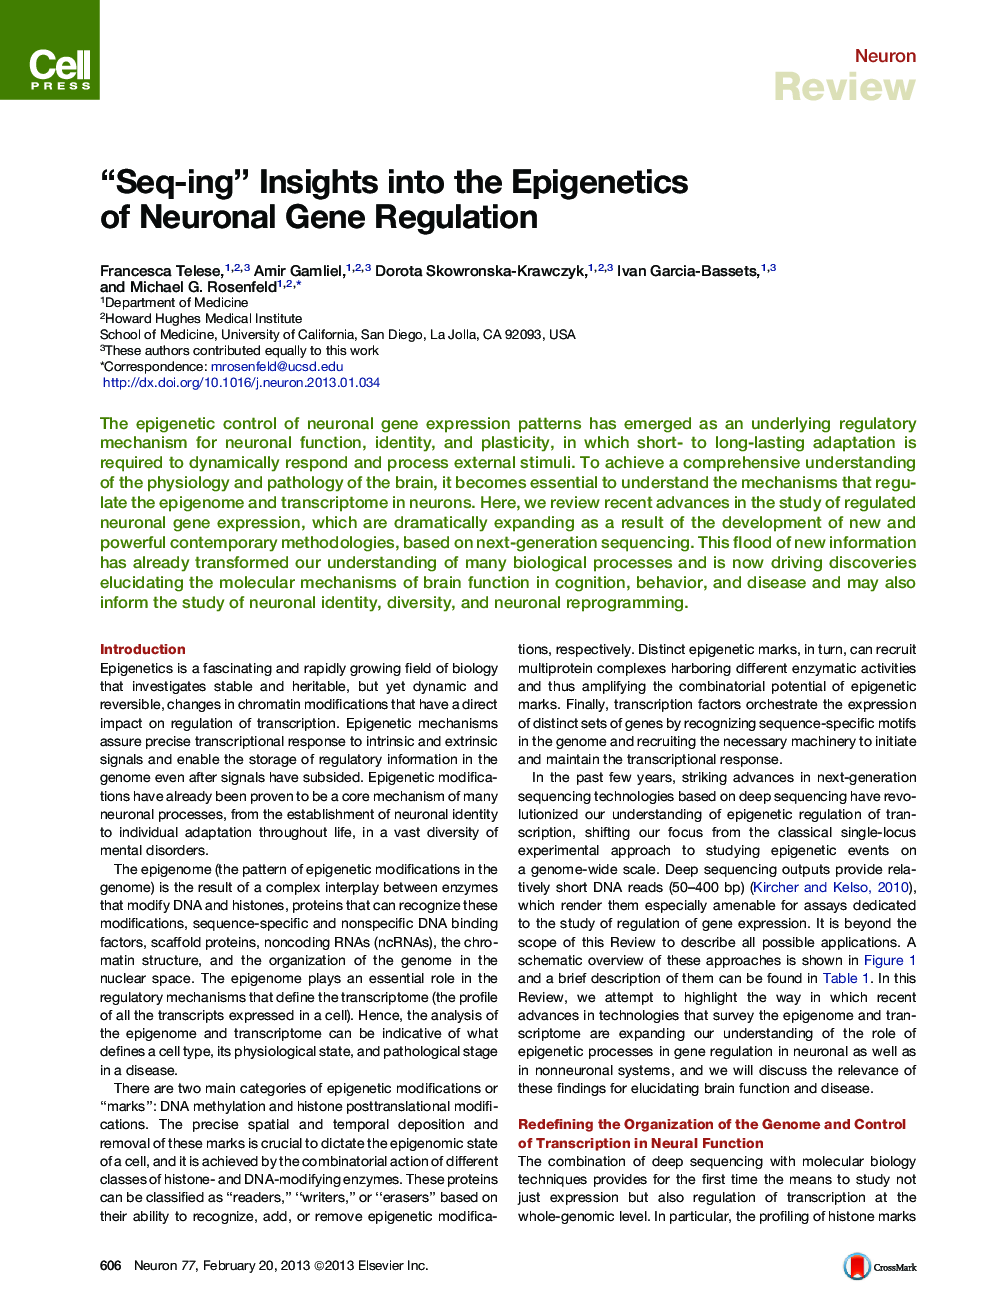 “Seq-ing” Insights into the Epigenetics of Neuronal Gene Regulation